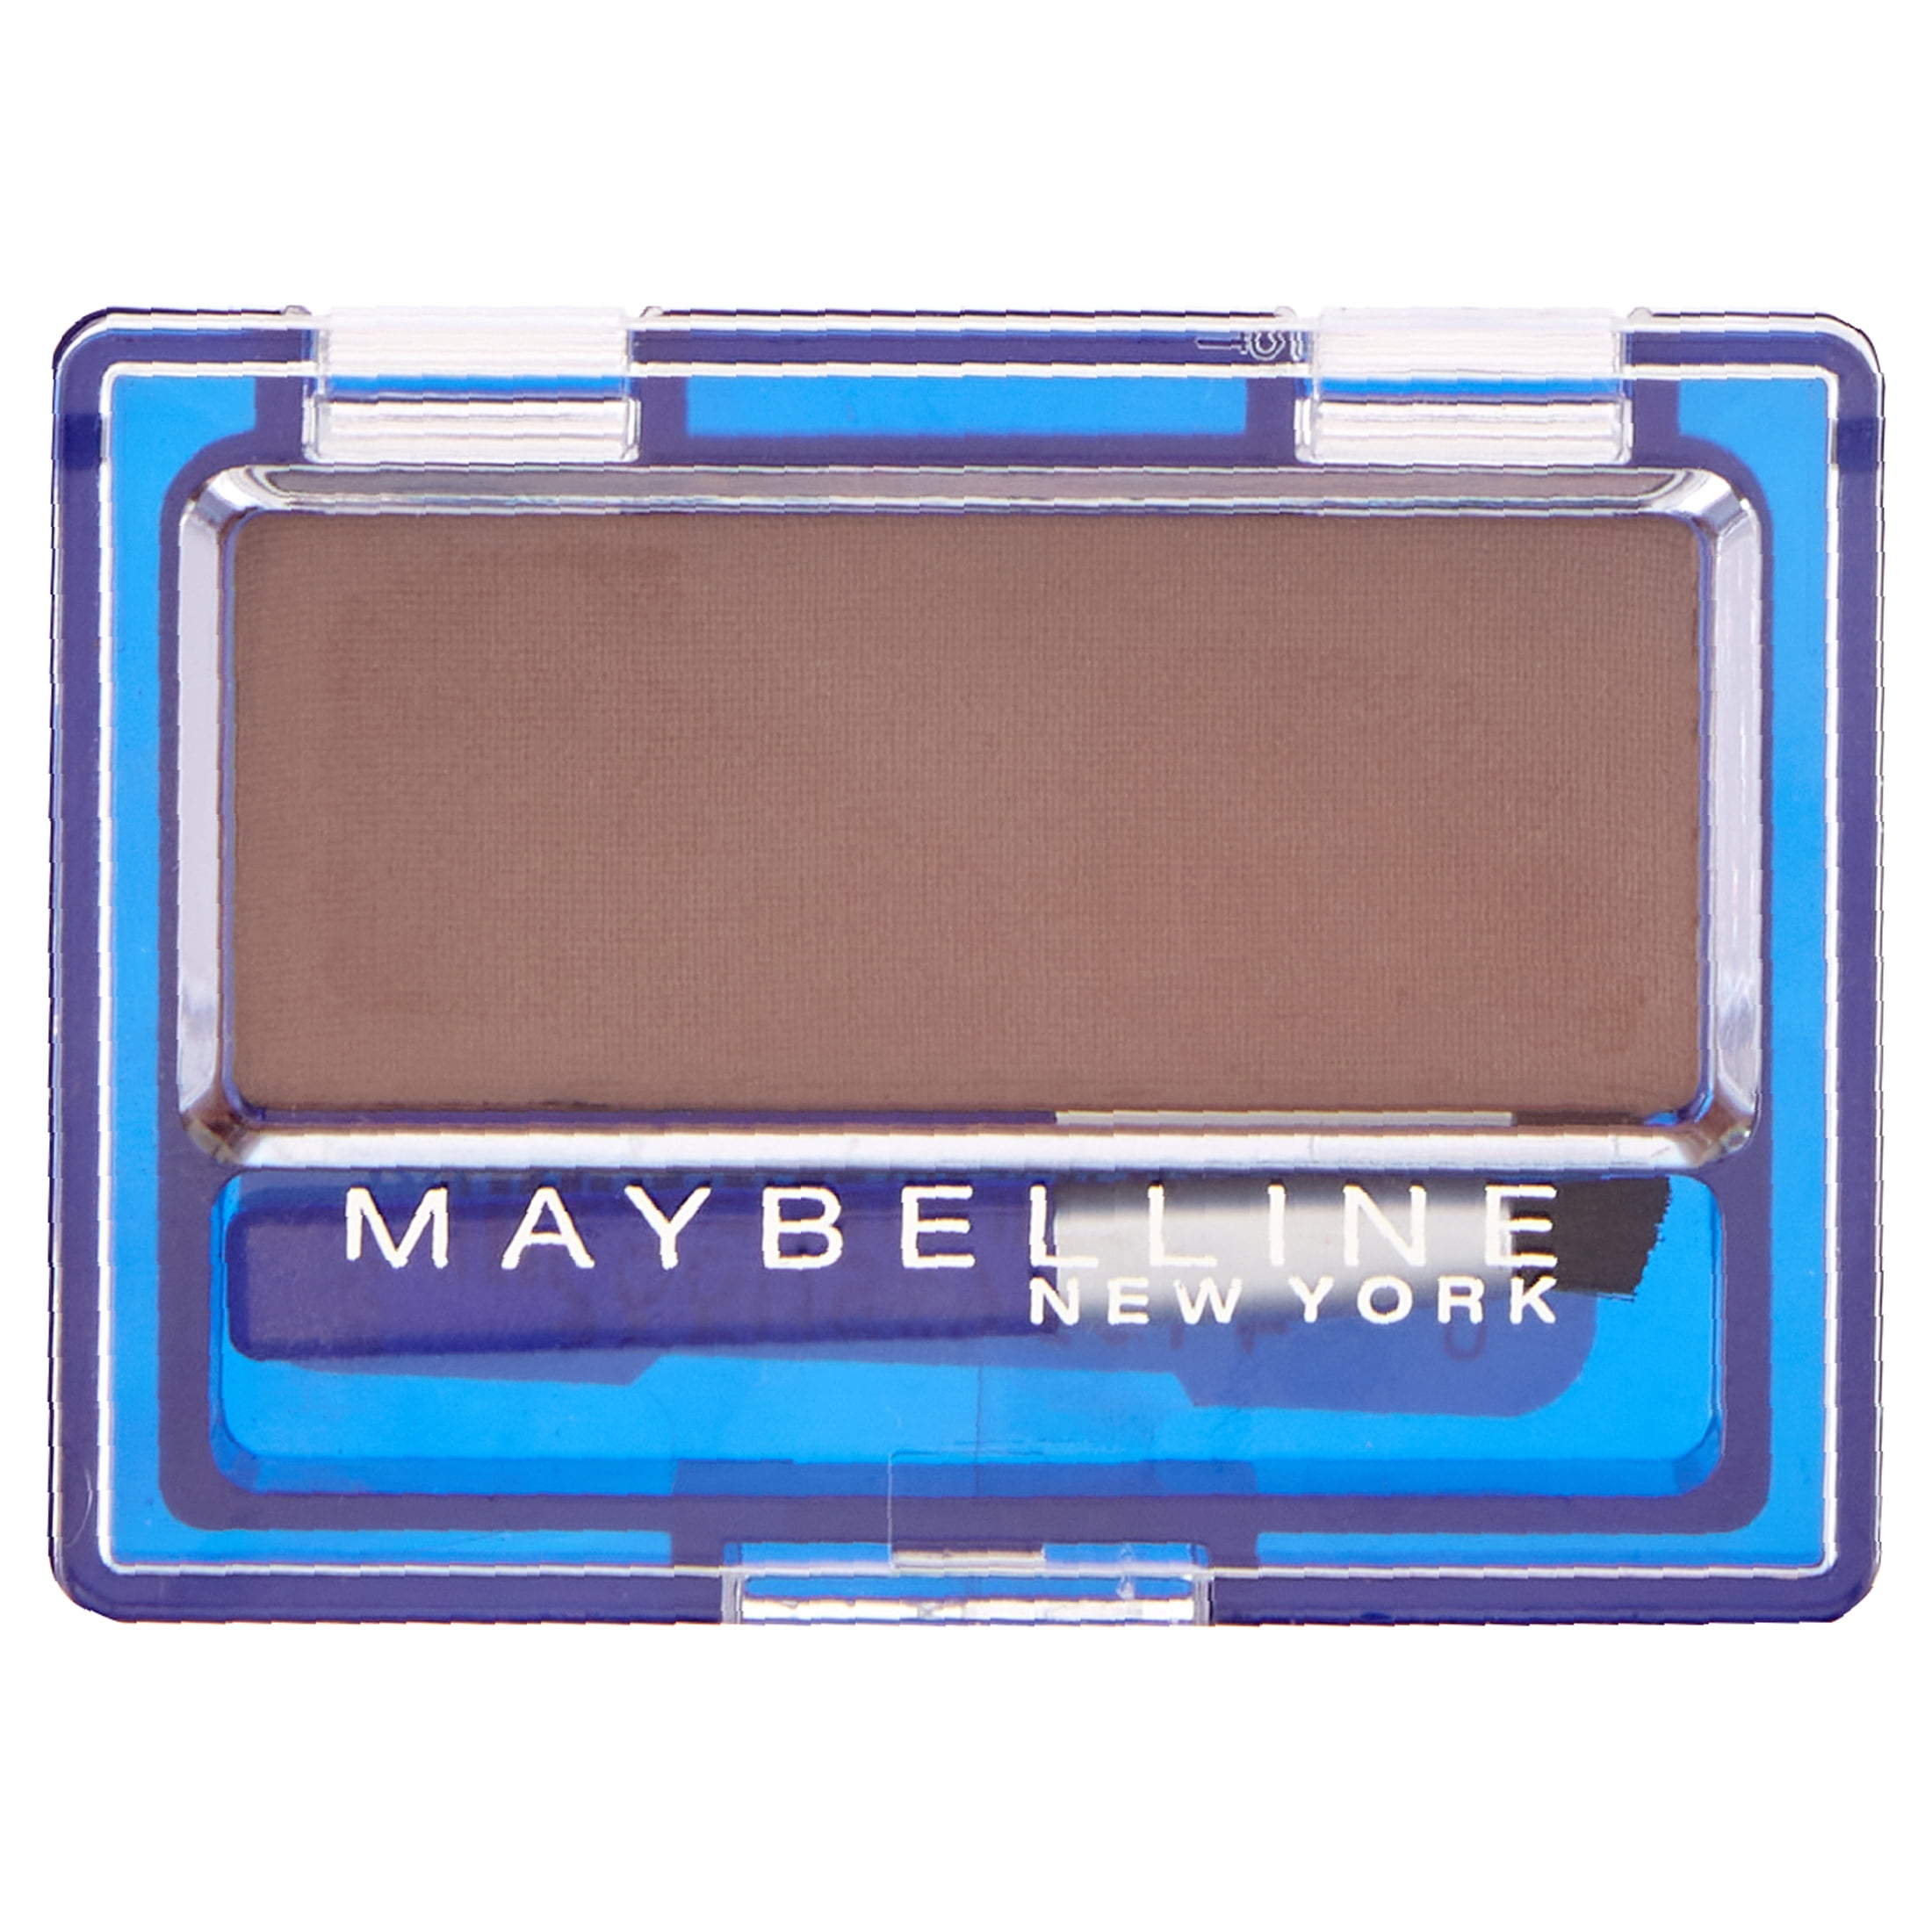 Maybelline New York Ultra Brow Brush-On Color, Light Brown, 0.1 fl oz -  Walmart.com